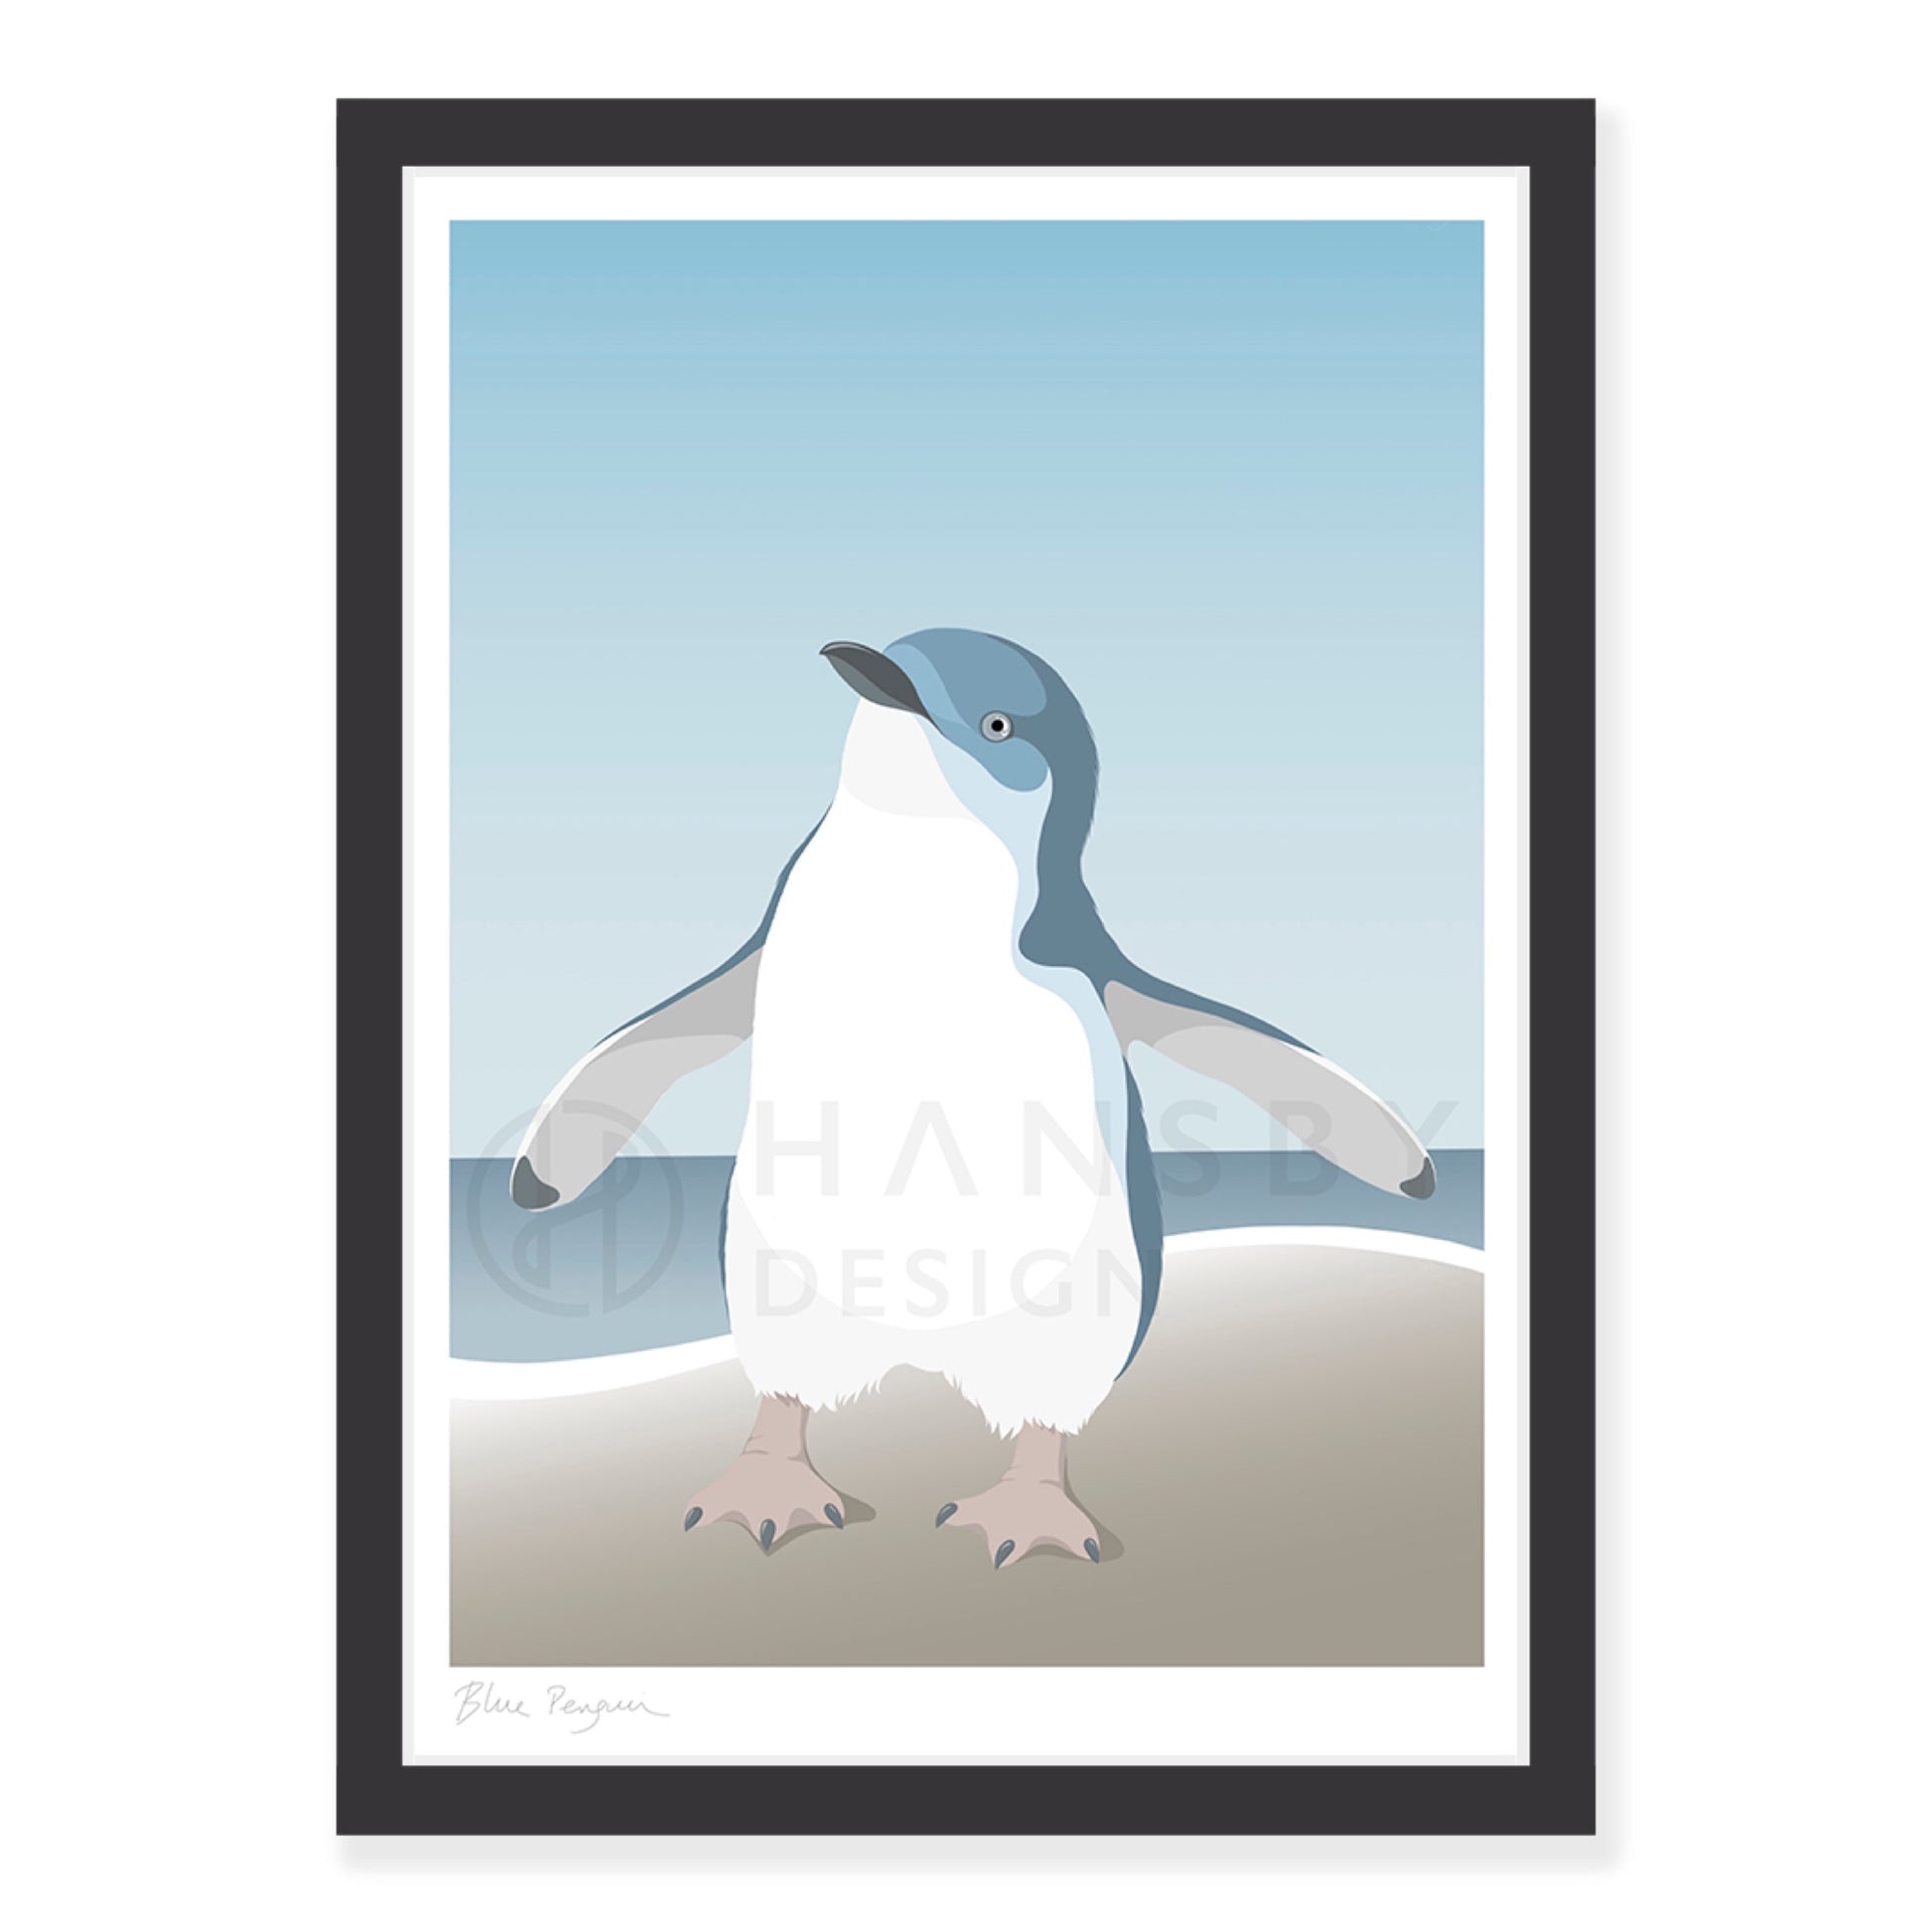 Blue Penguin art print in black frame, by NZ artist Hansby Design